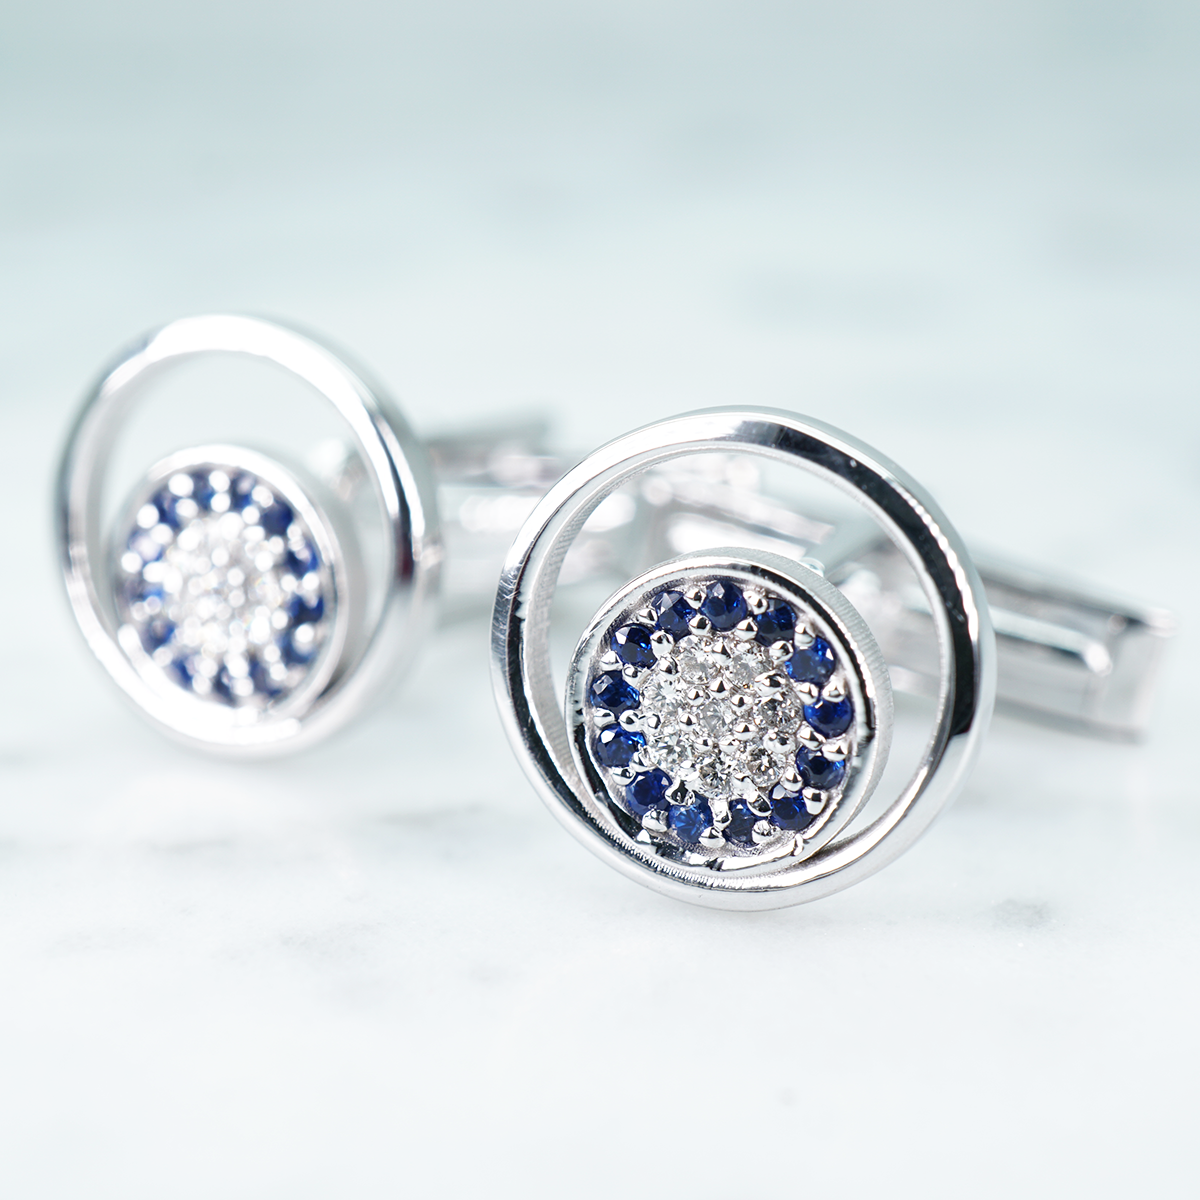 Chatra Gemstone Blue Sapphire Cufflinks with Diamond in 14k White Gold